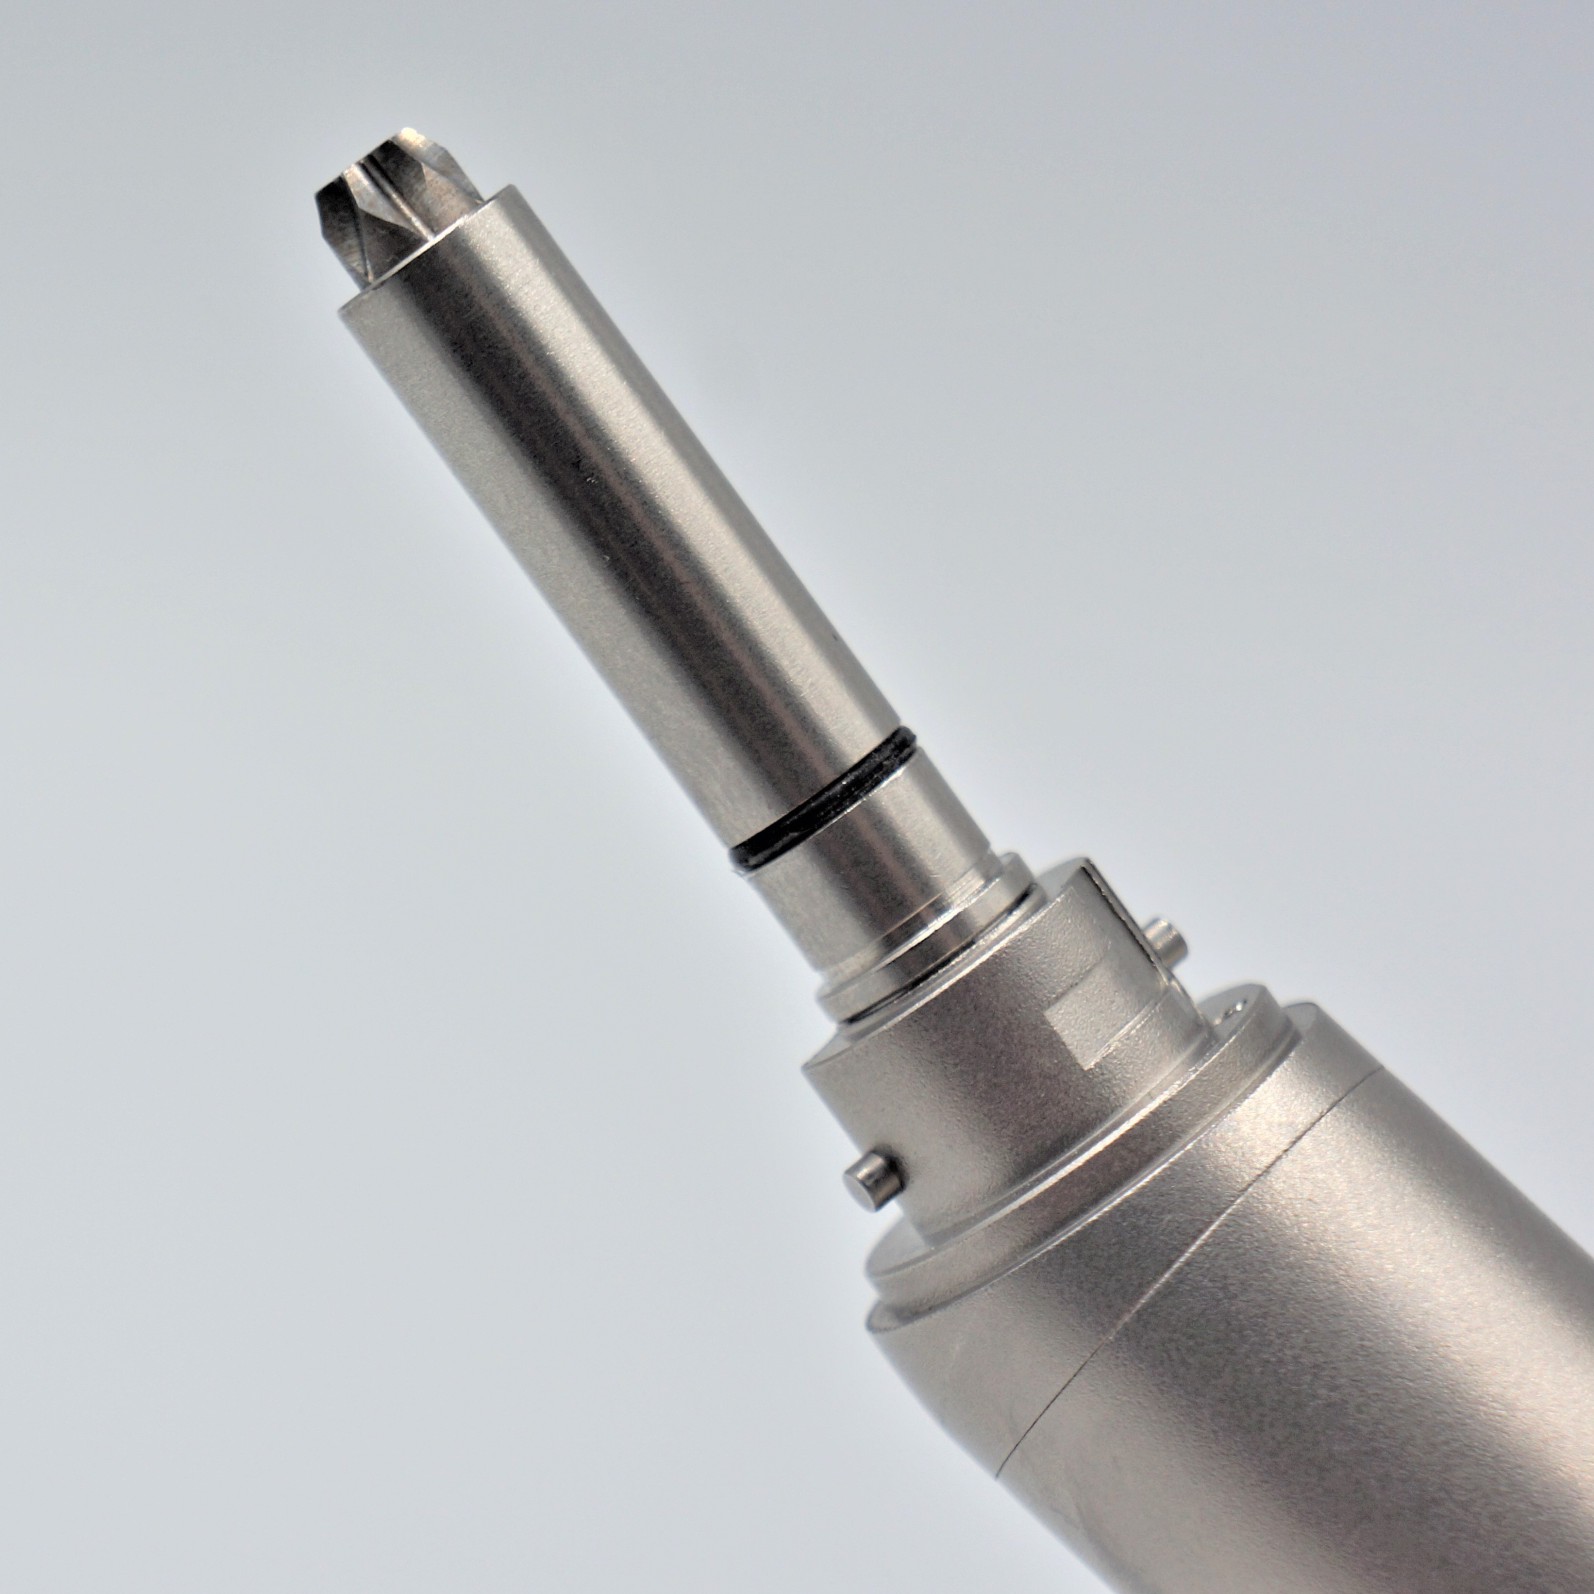 Fiber optic 20:1 Implant contra angle dental handpiece 202C13D